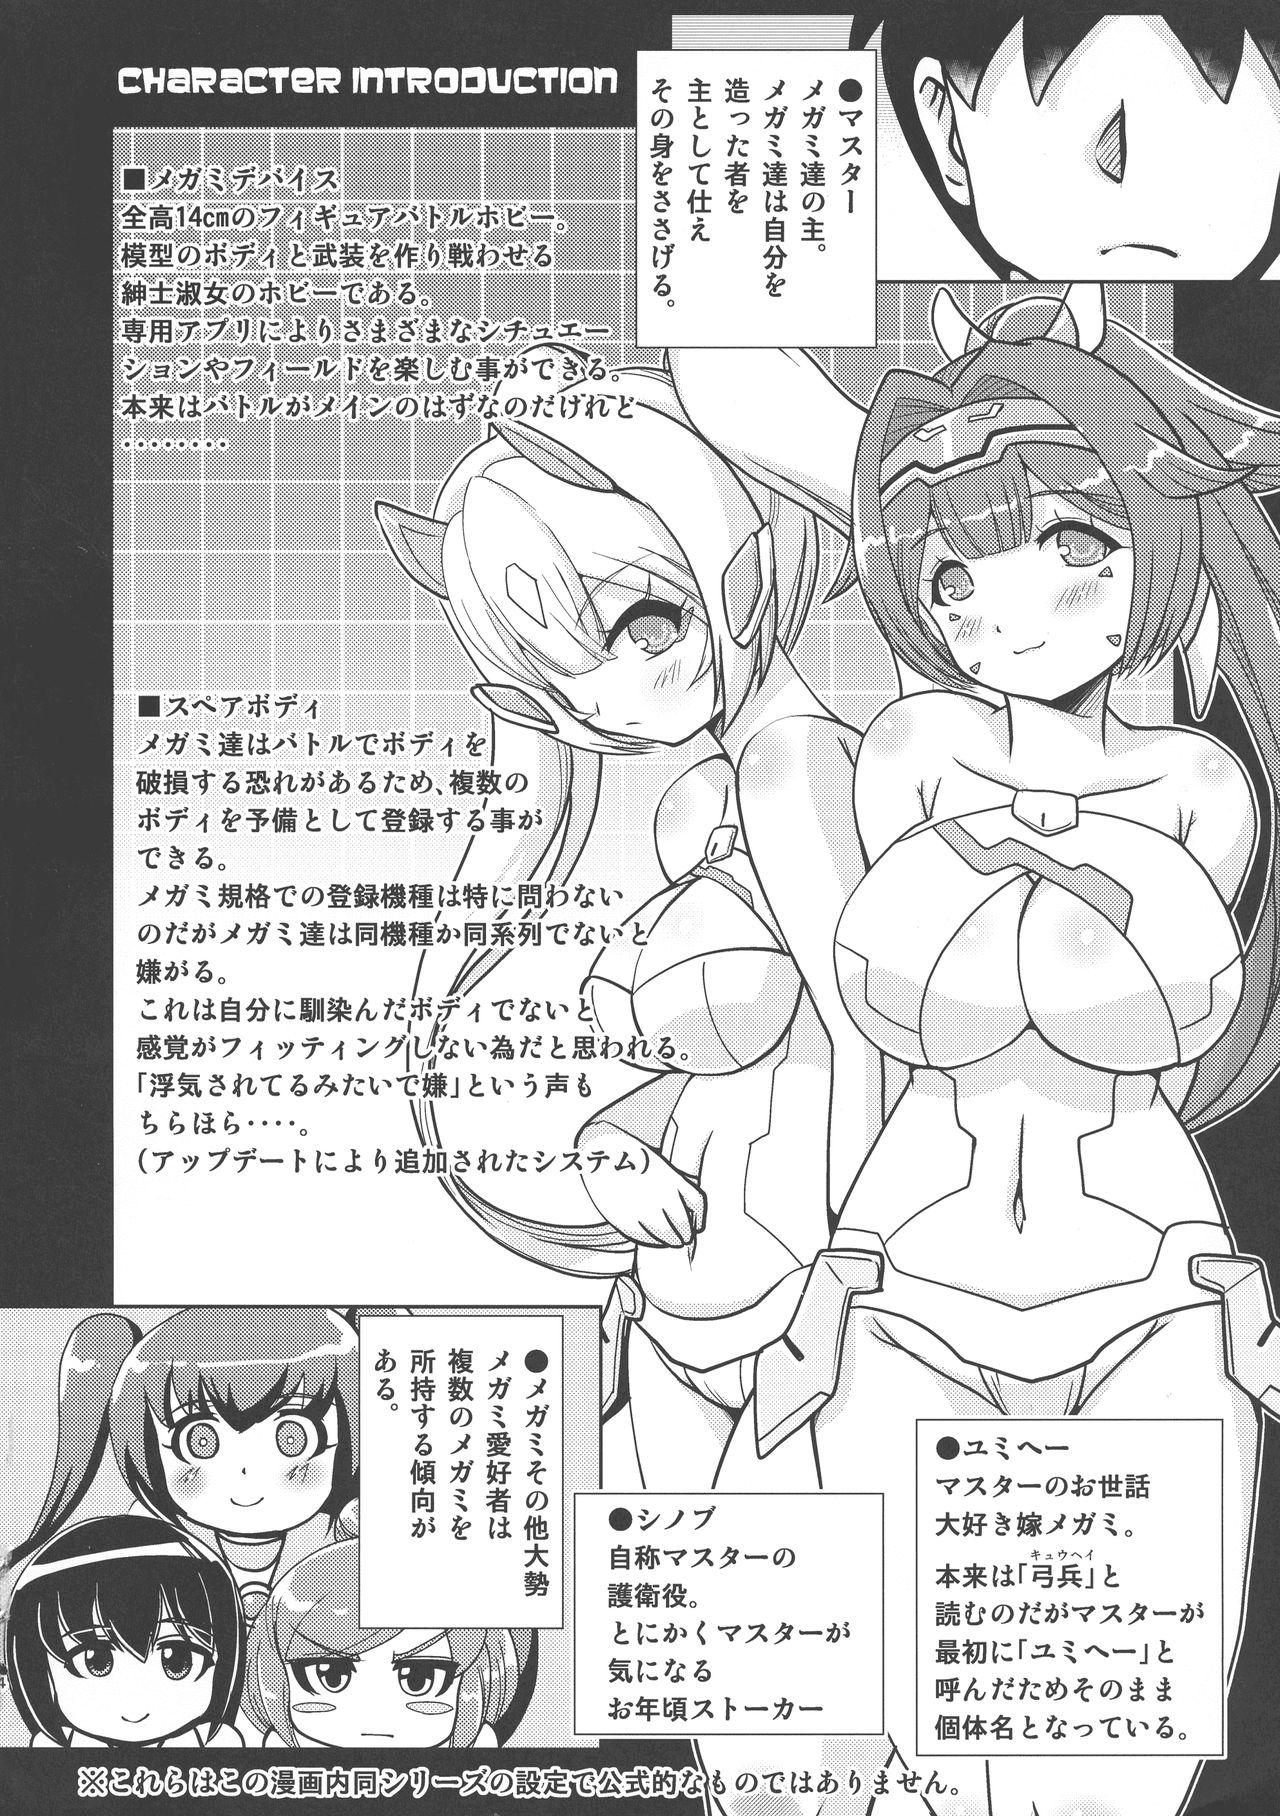 Farting Yumihei to Chichi - Megami device Pau - Page 4